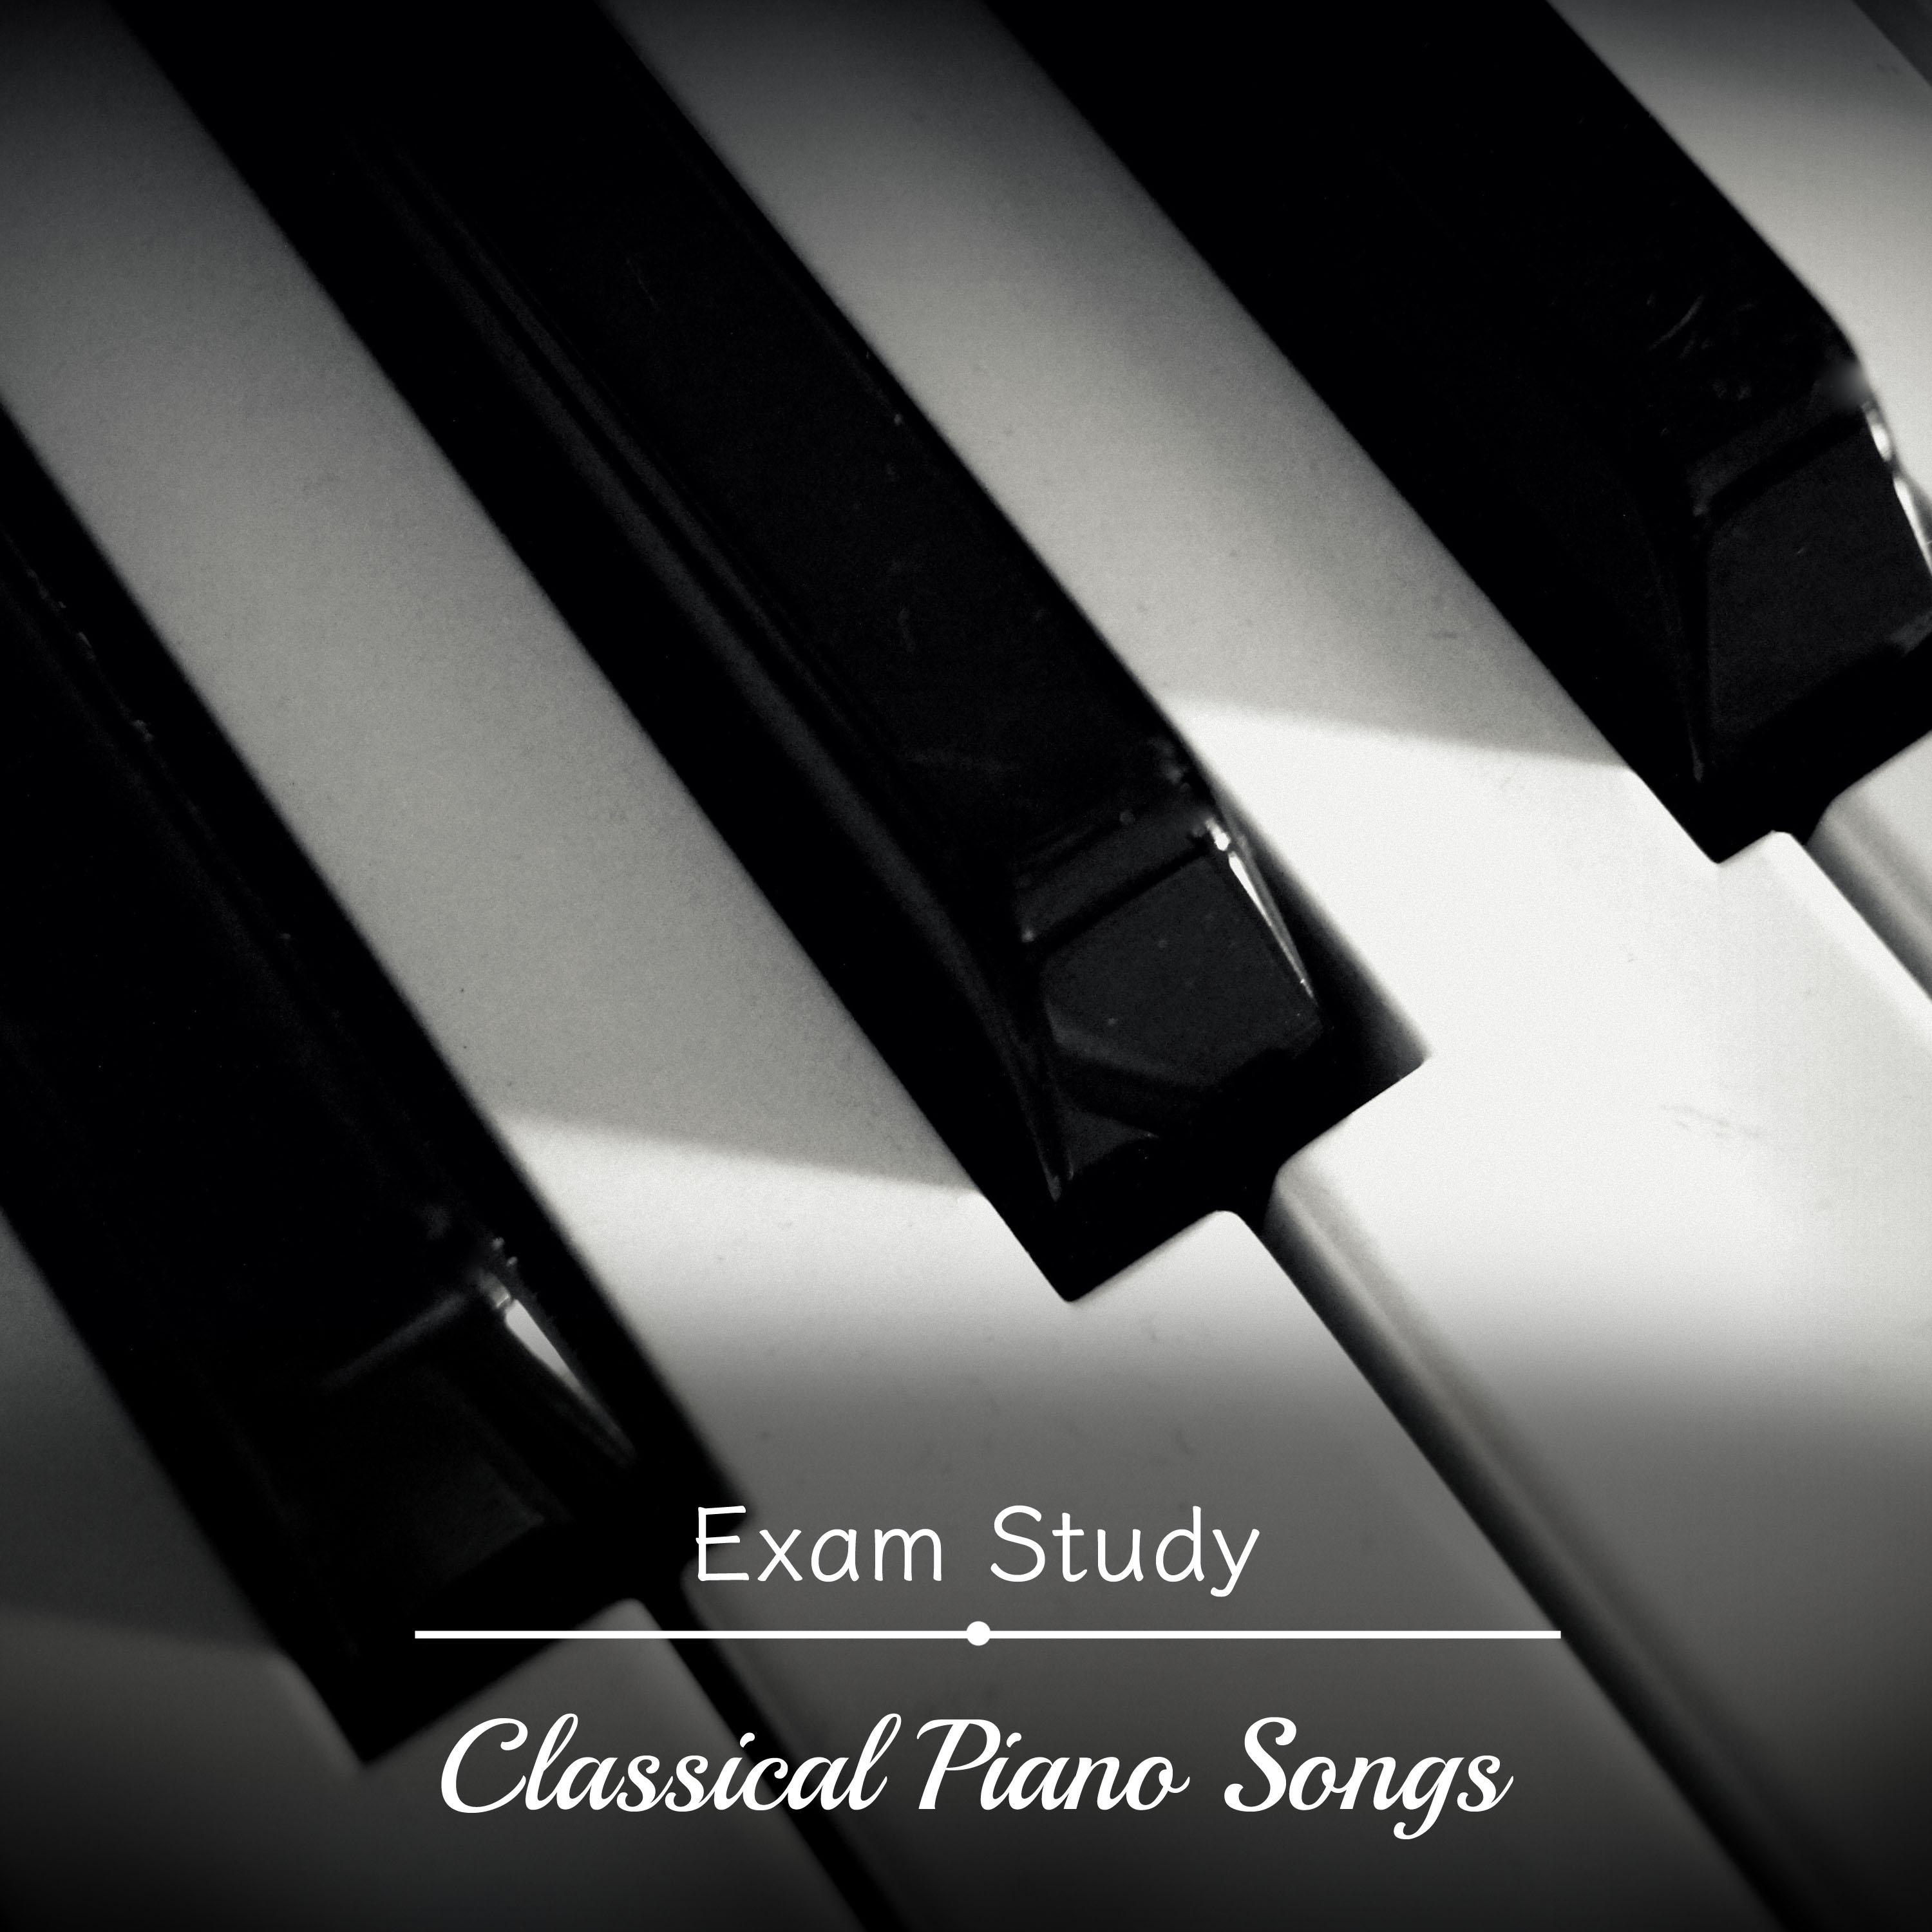 15 Exam Study Classical Piano Songs